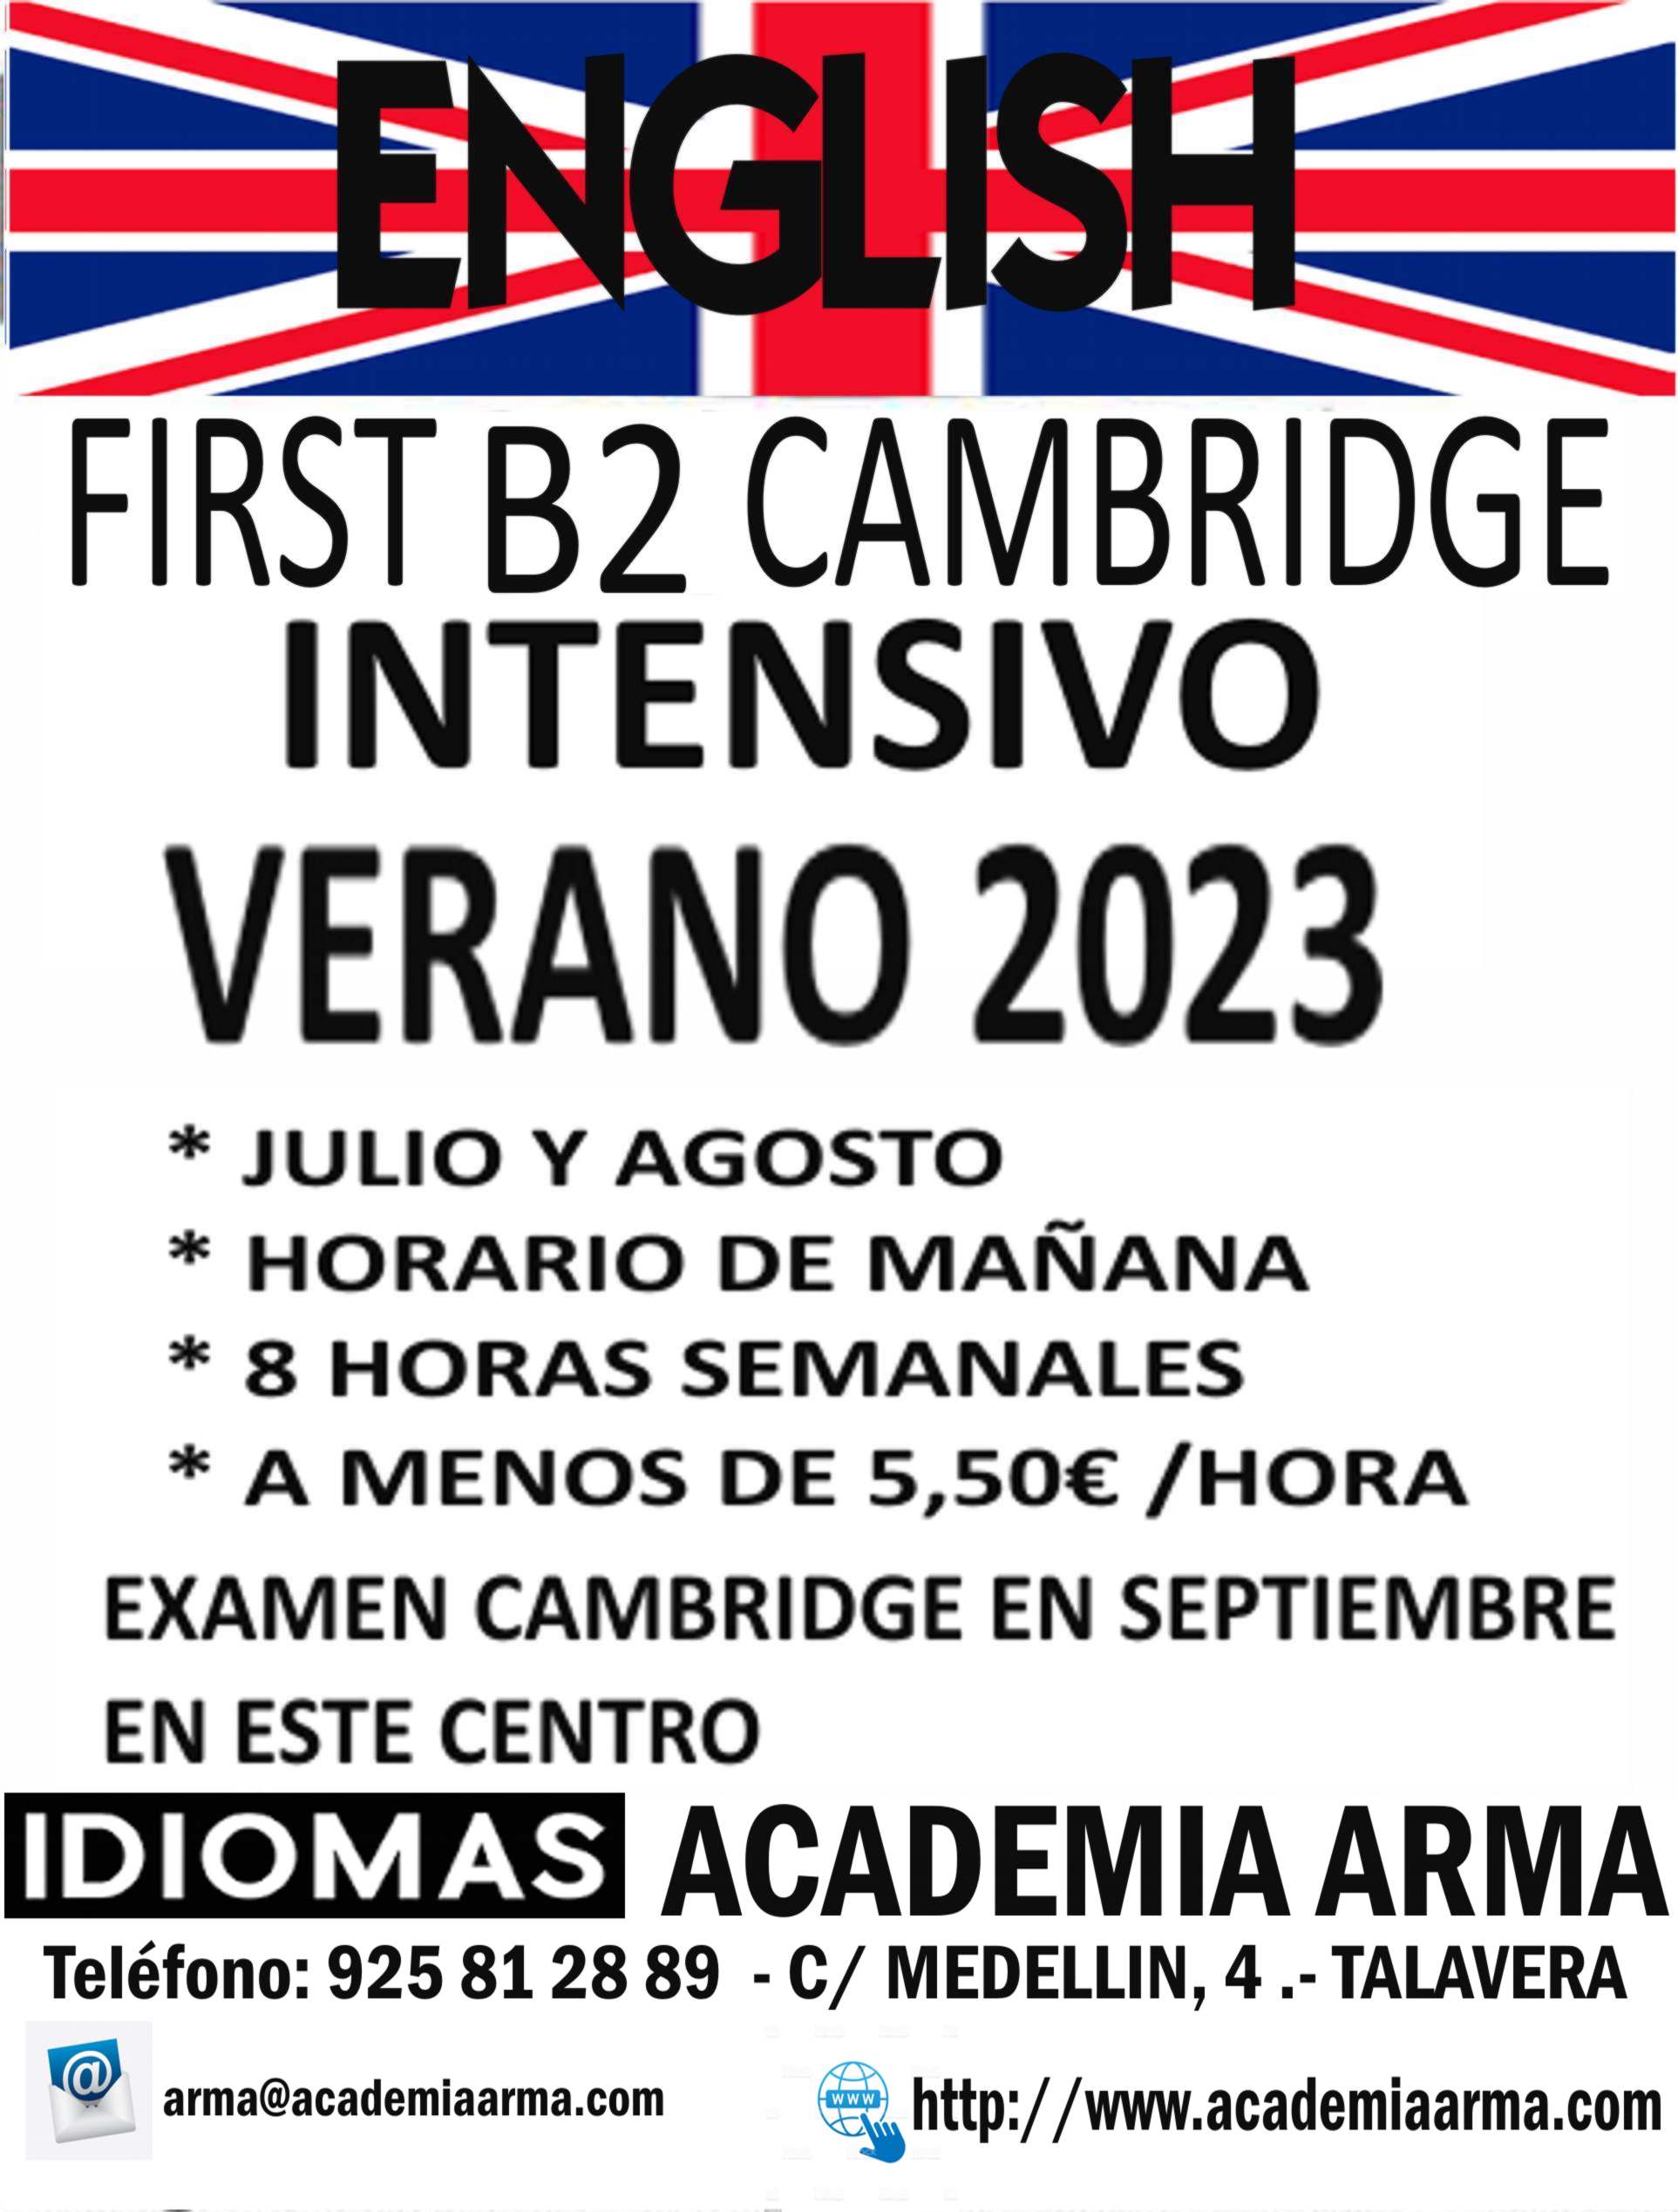 B2 INTENSIVO VERANO 2023 - Formación